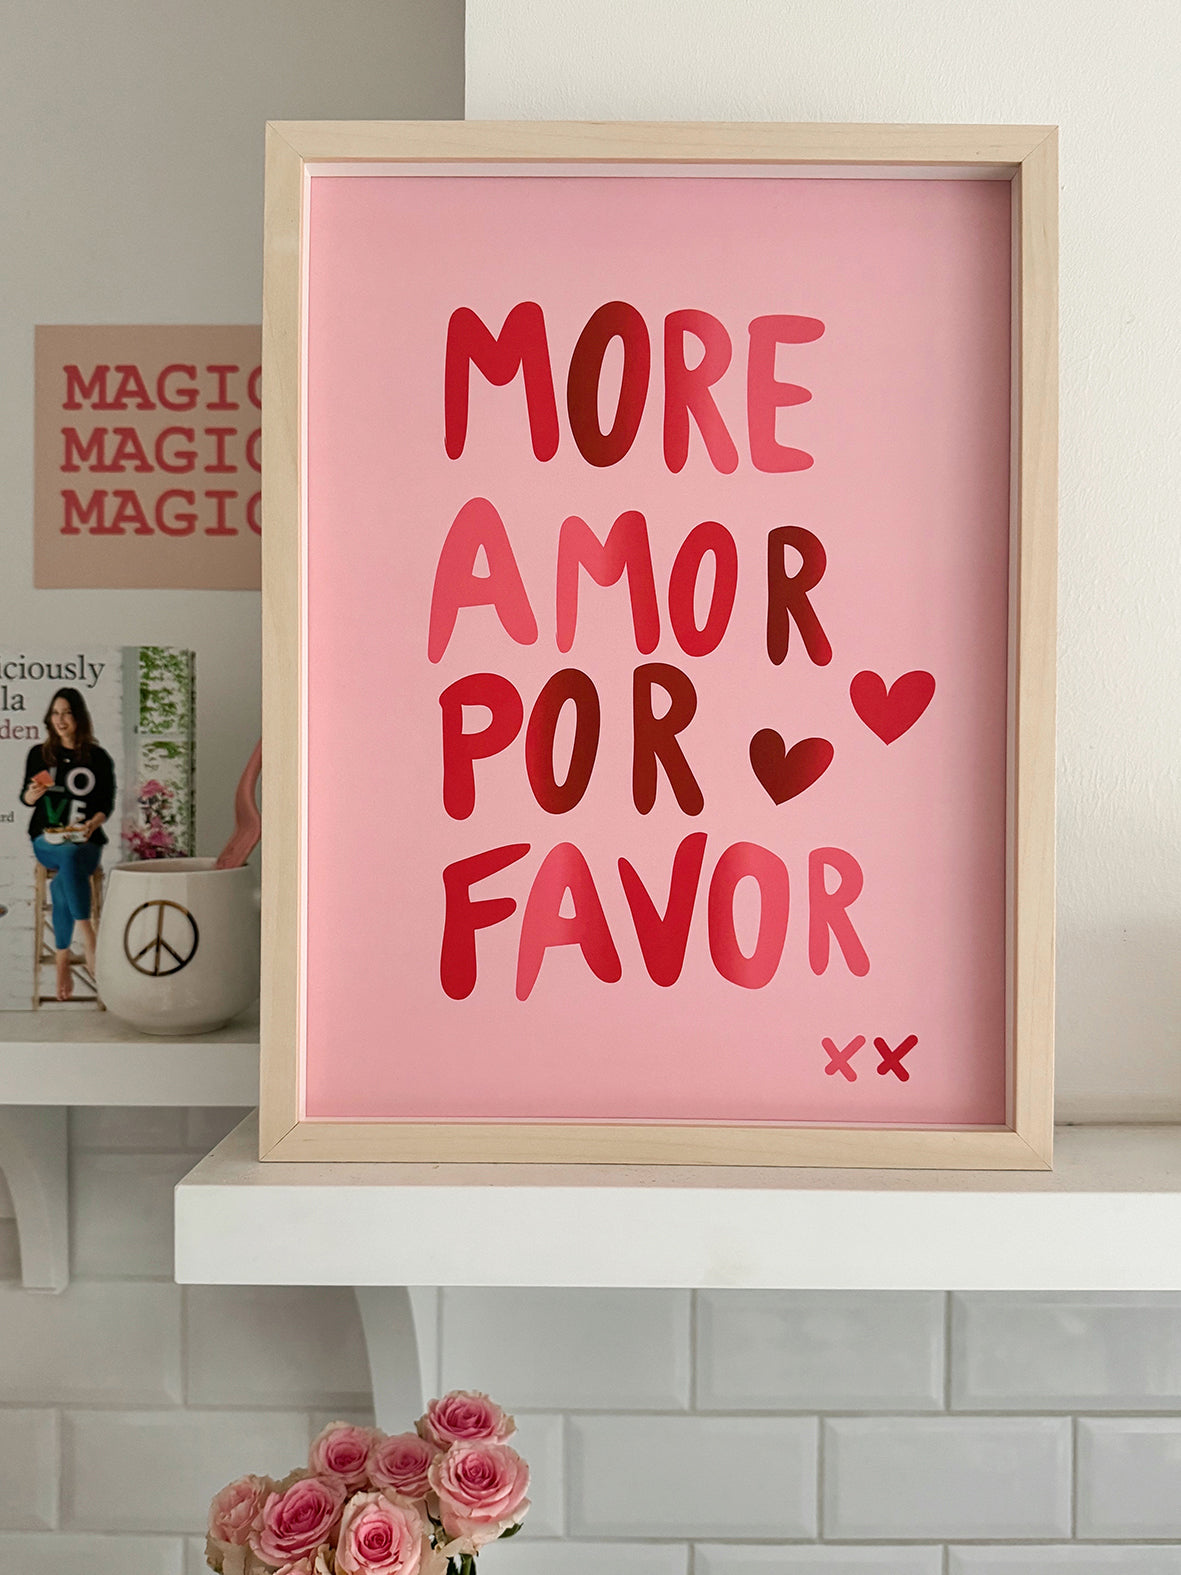 Poster "More amor por favor"